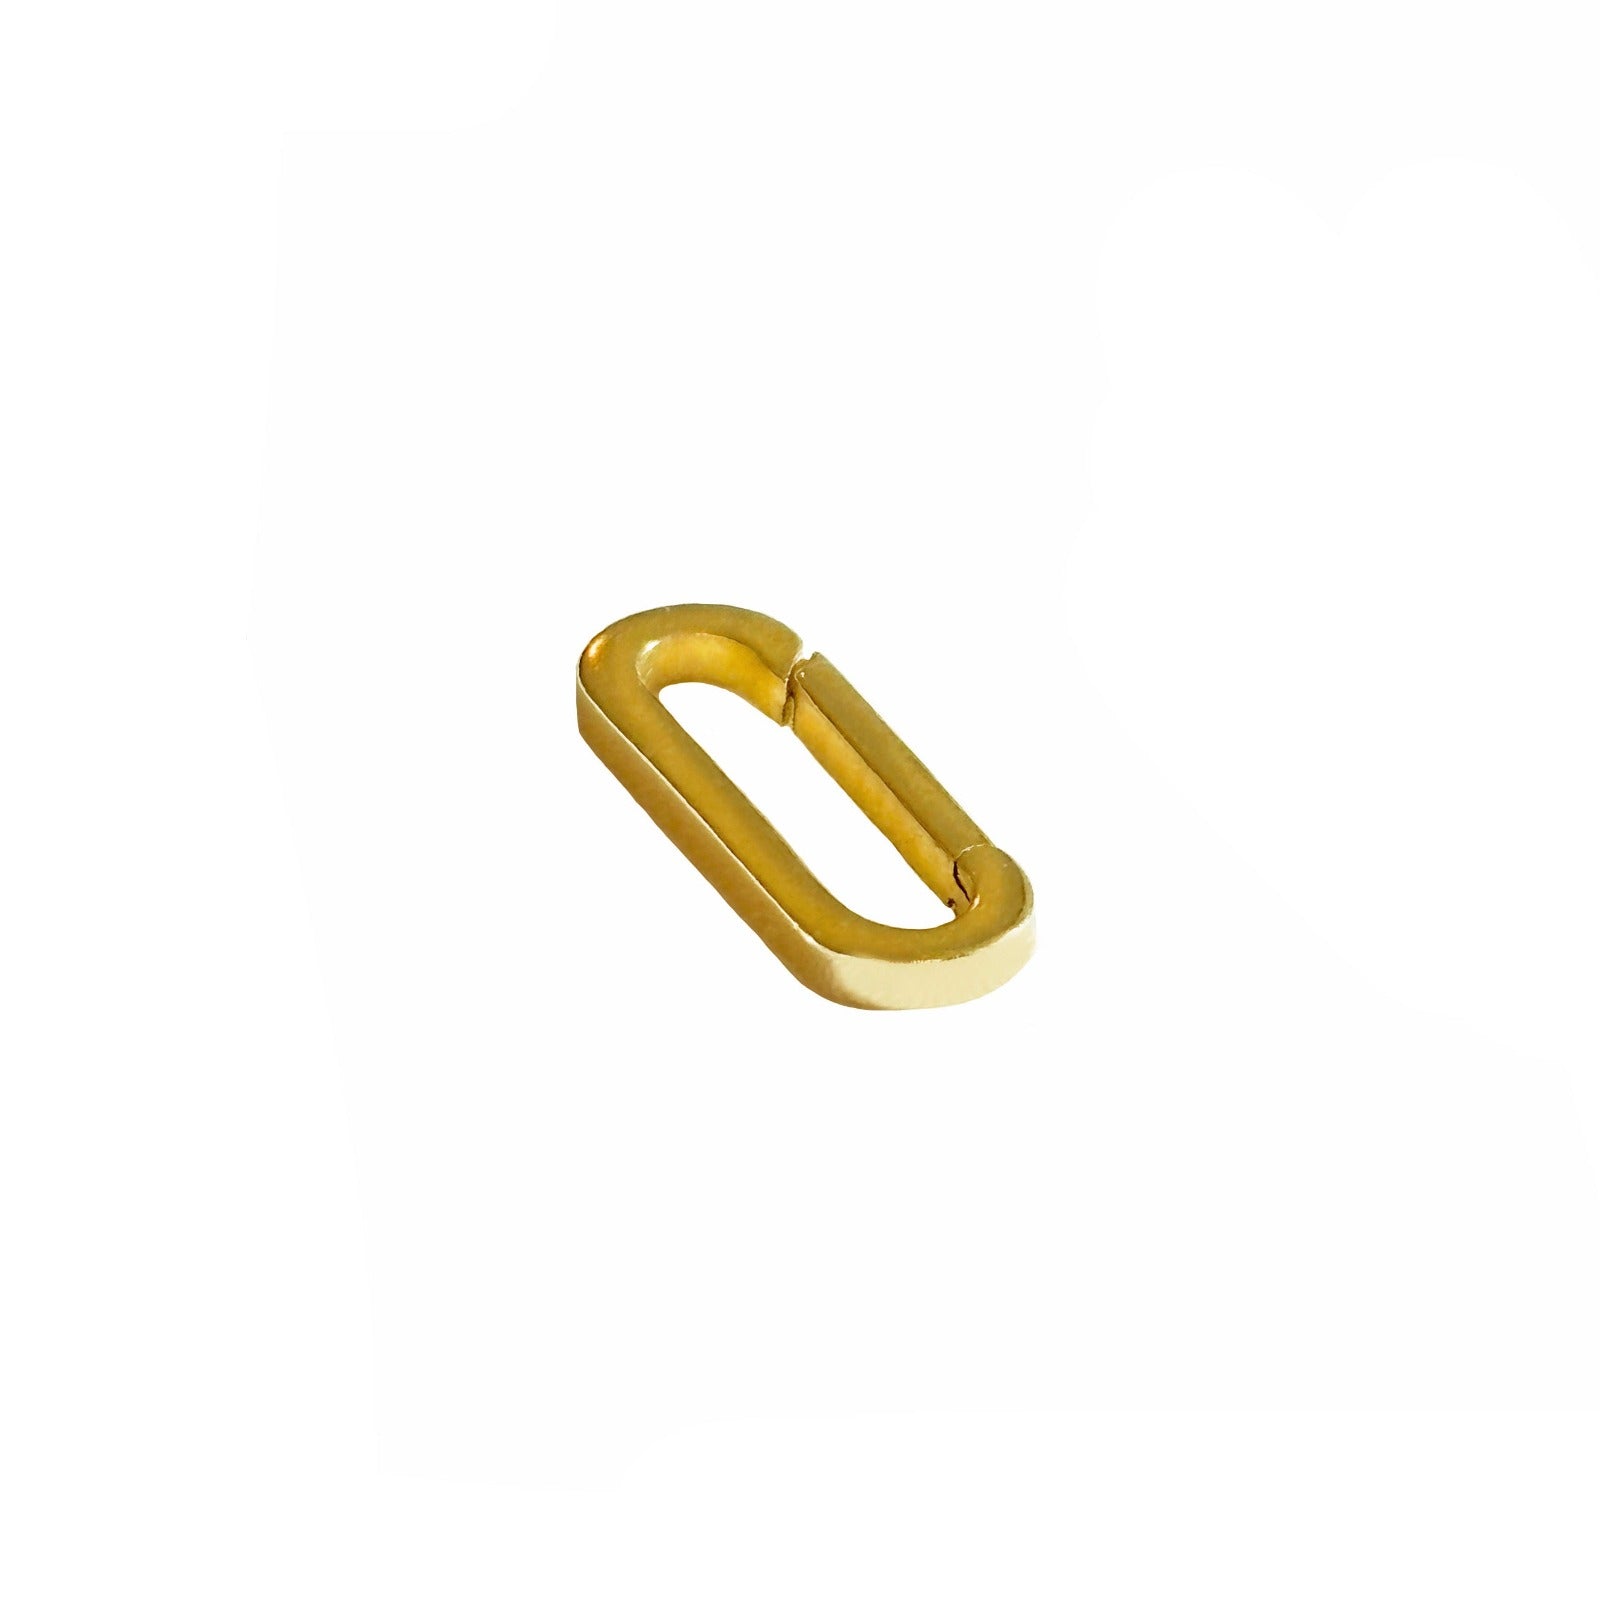 14k yellow gold oval locking charm.